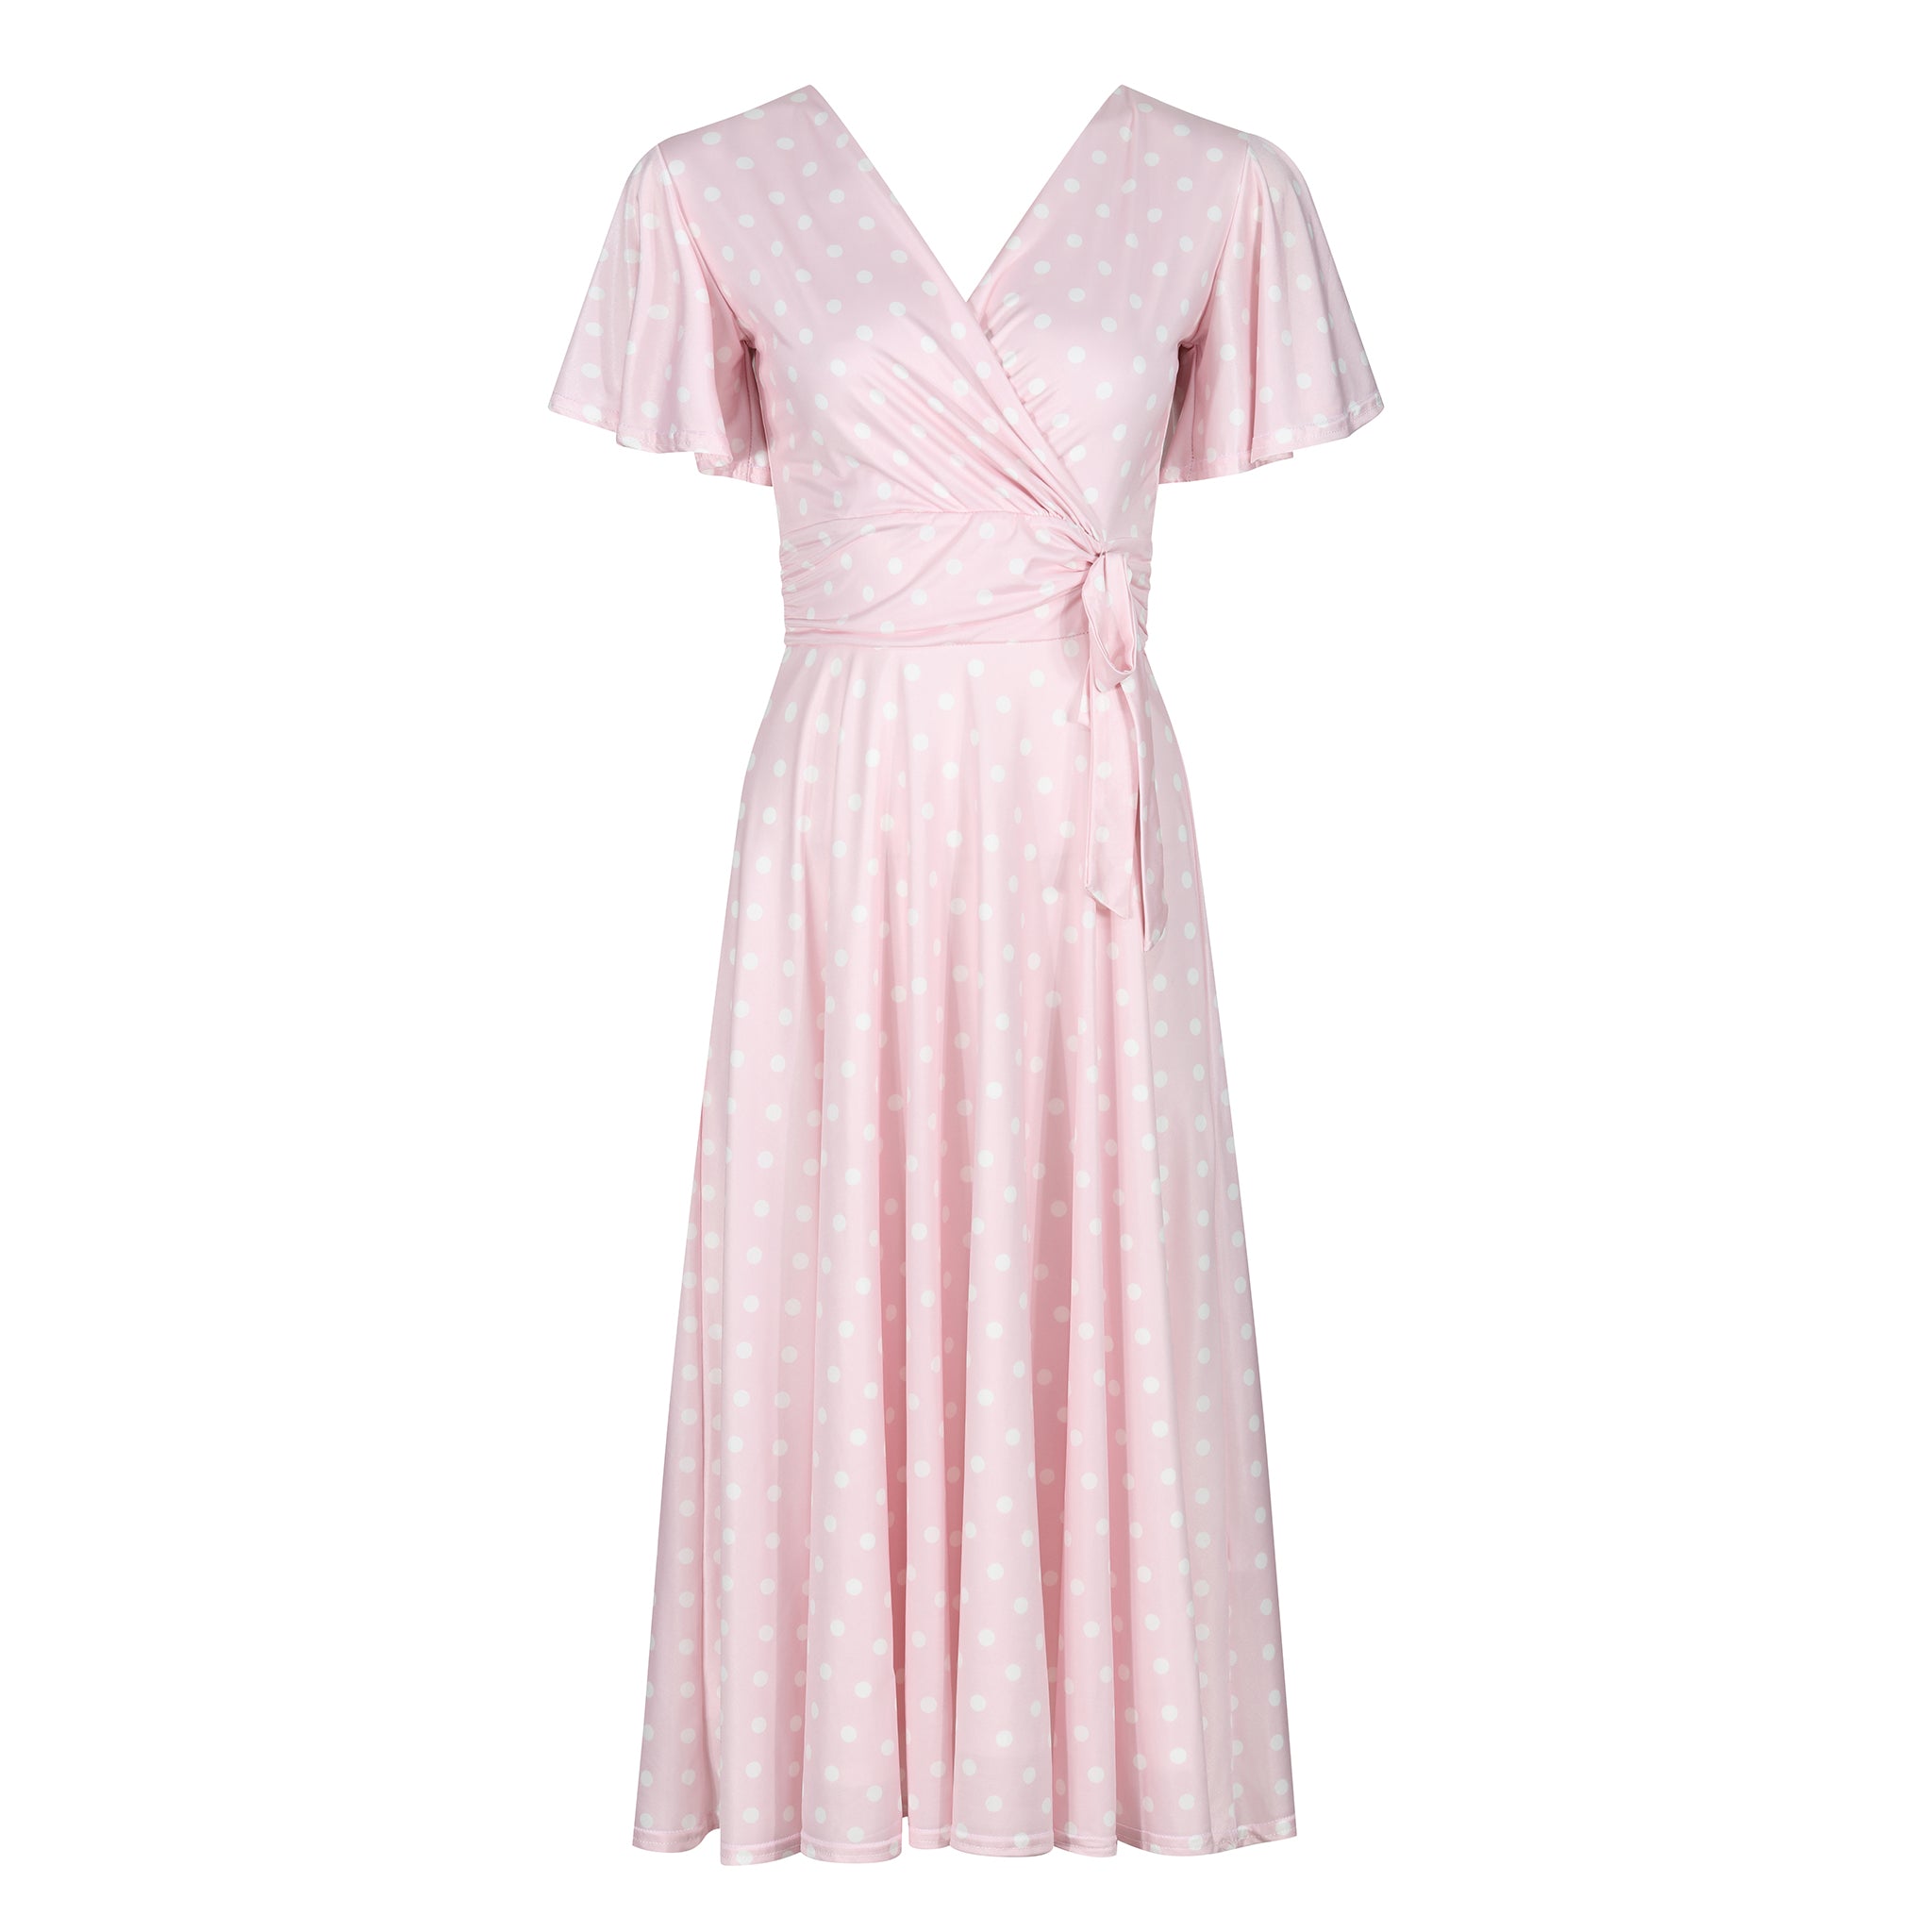 Pale Pink White Polka Dot Waterfall Sleeve Swing Dress